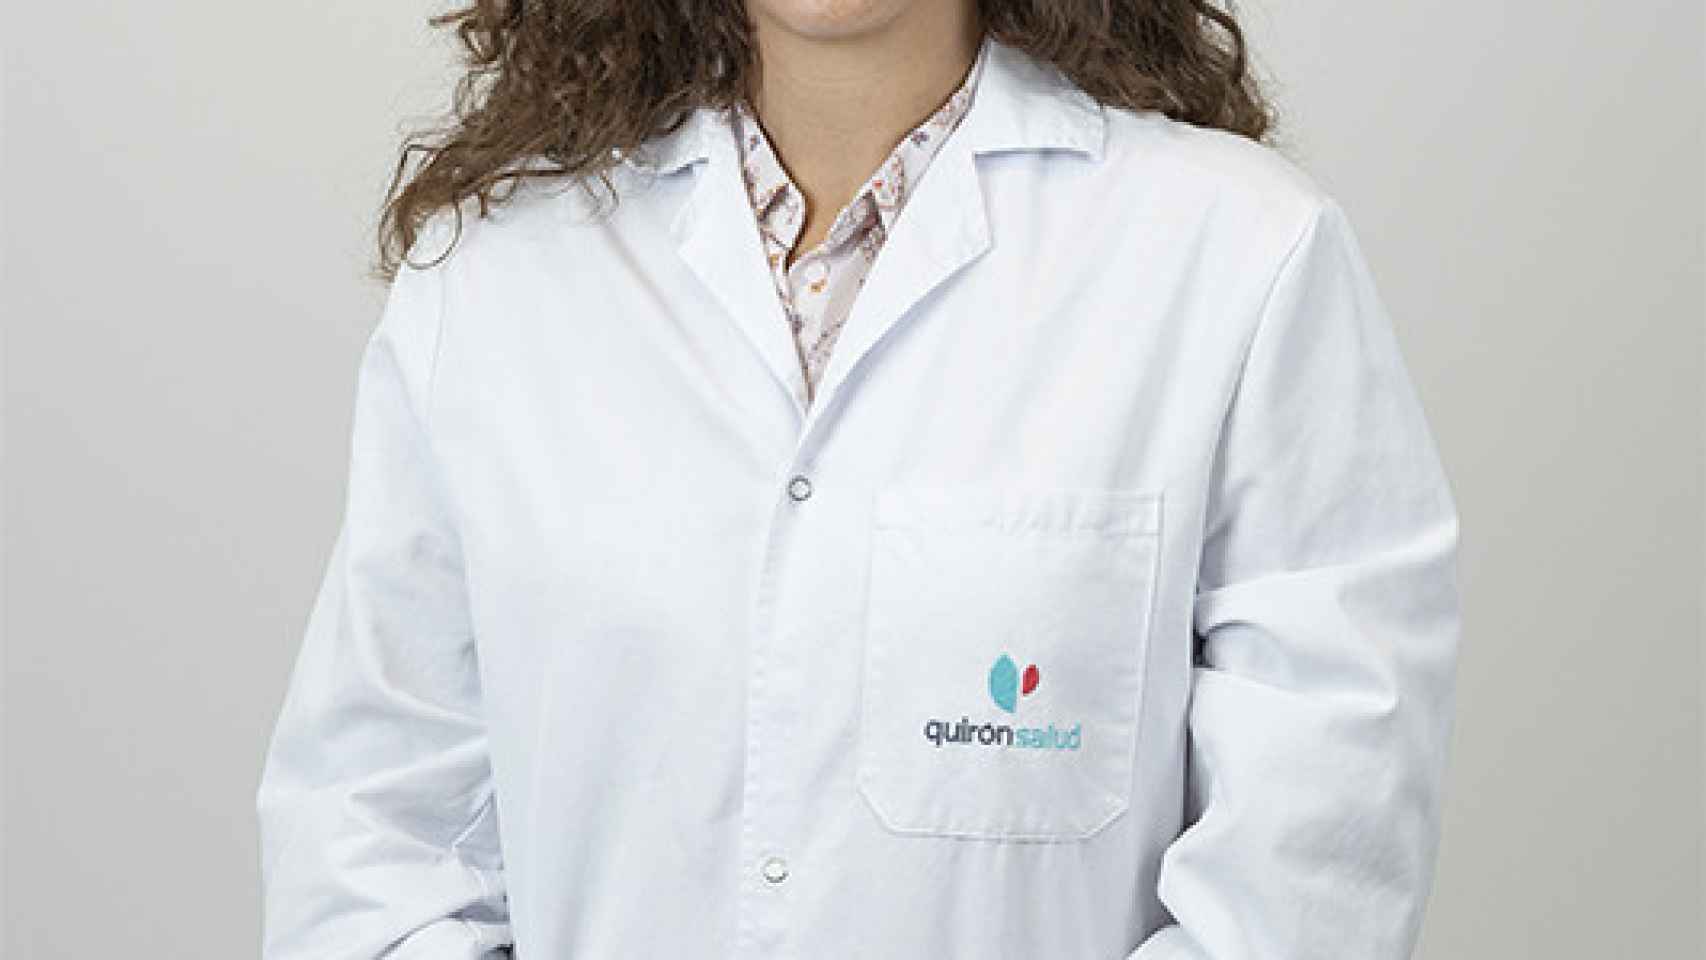 La doctora Irene López.